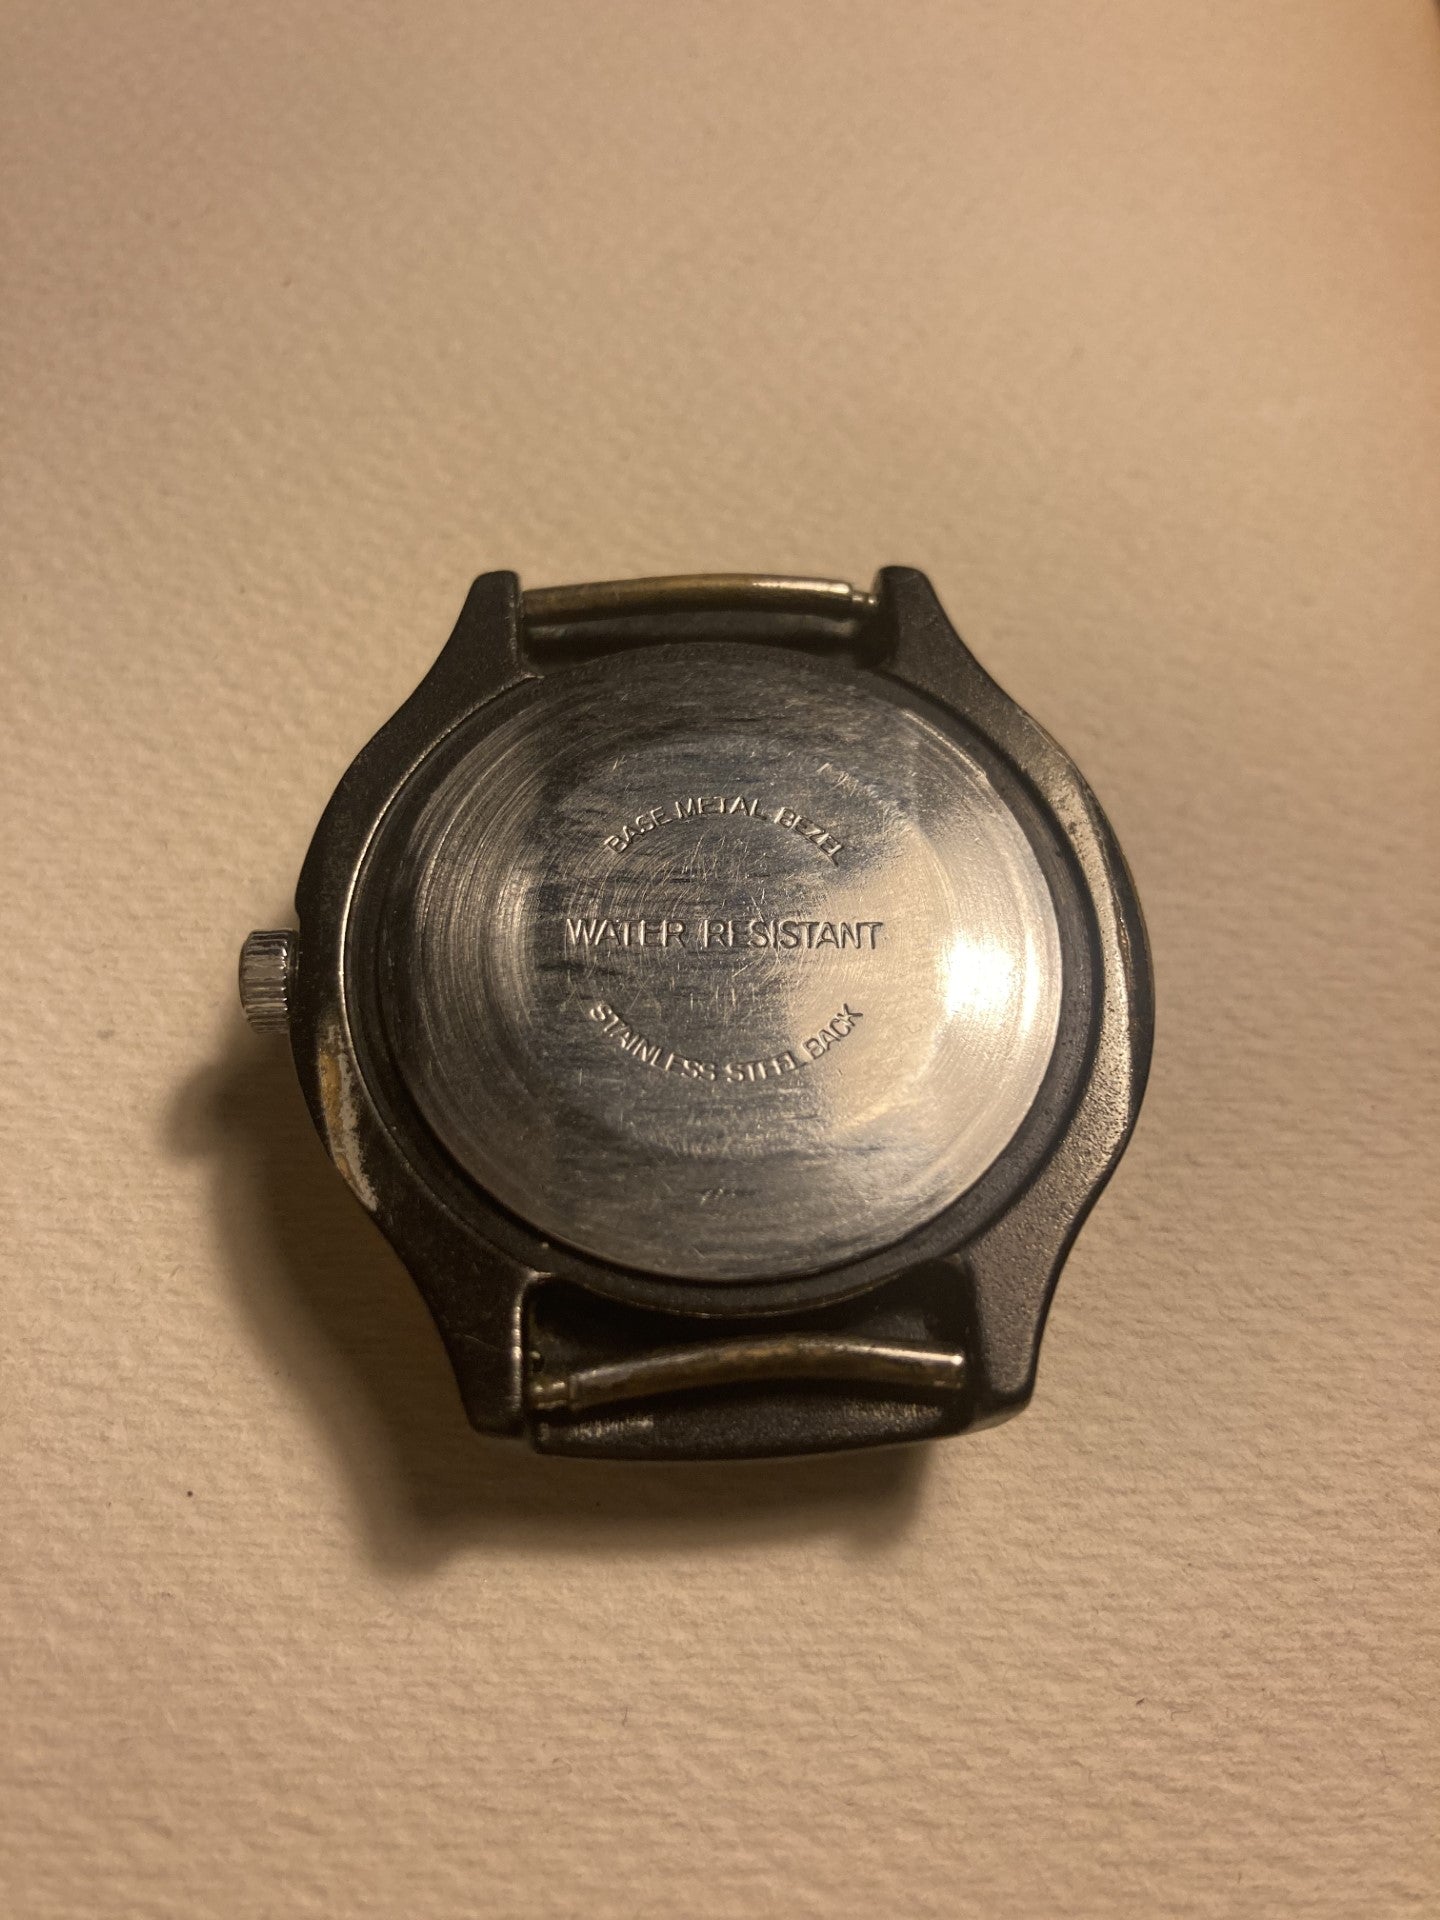 Vintage Timex Tachometer, mechanical movement - No. 01052